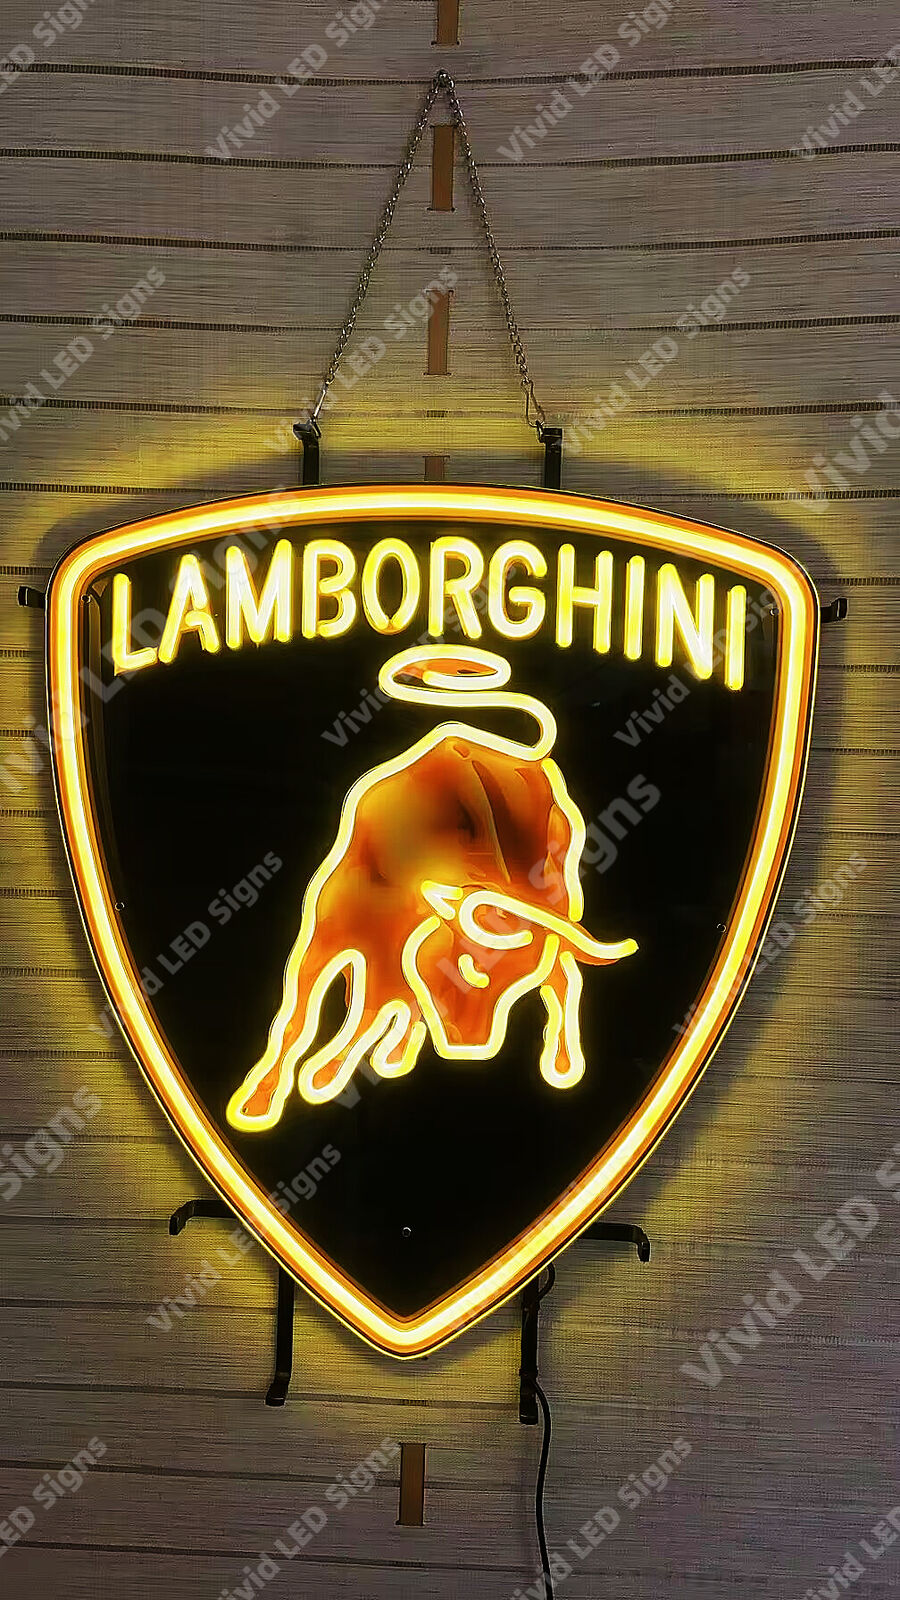 Lamborghini Sports Car Auto Vivid LED Neon Sign Light Lamp With Dimmer